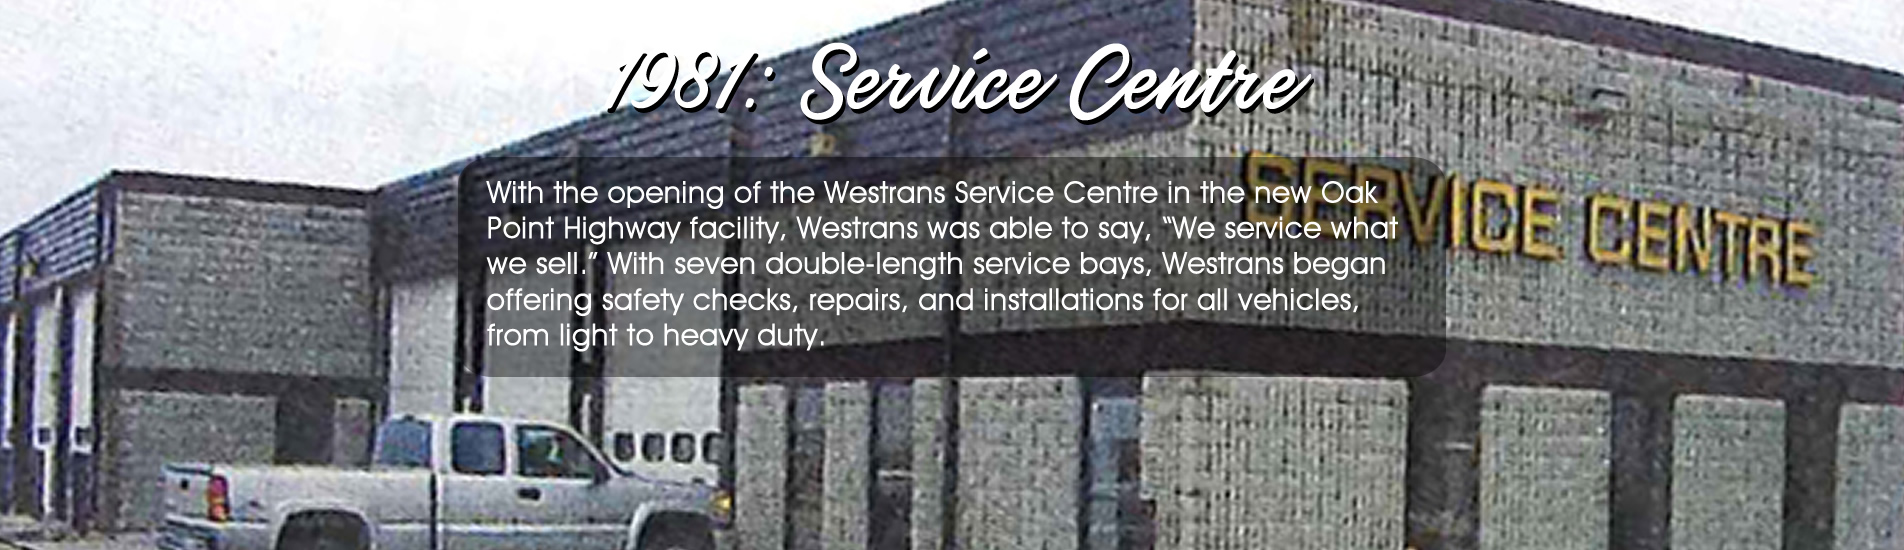 westrans-service-centre-1981